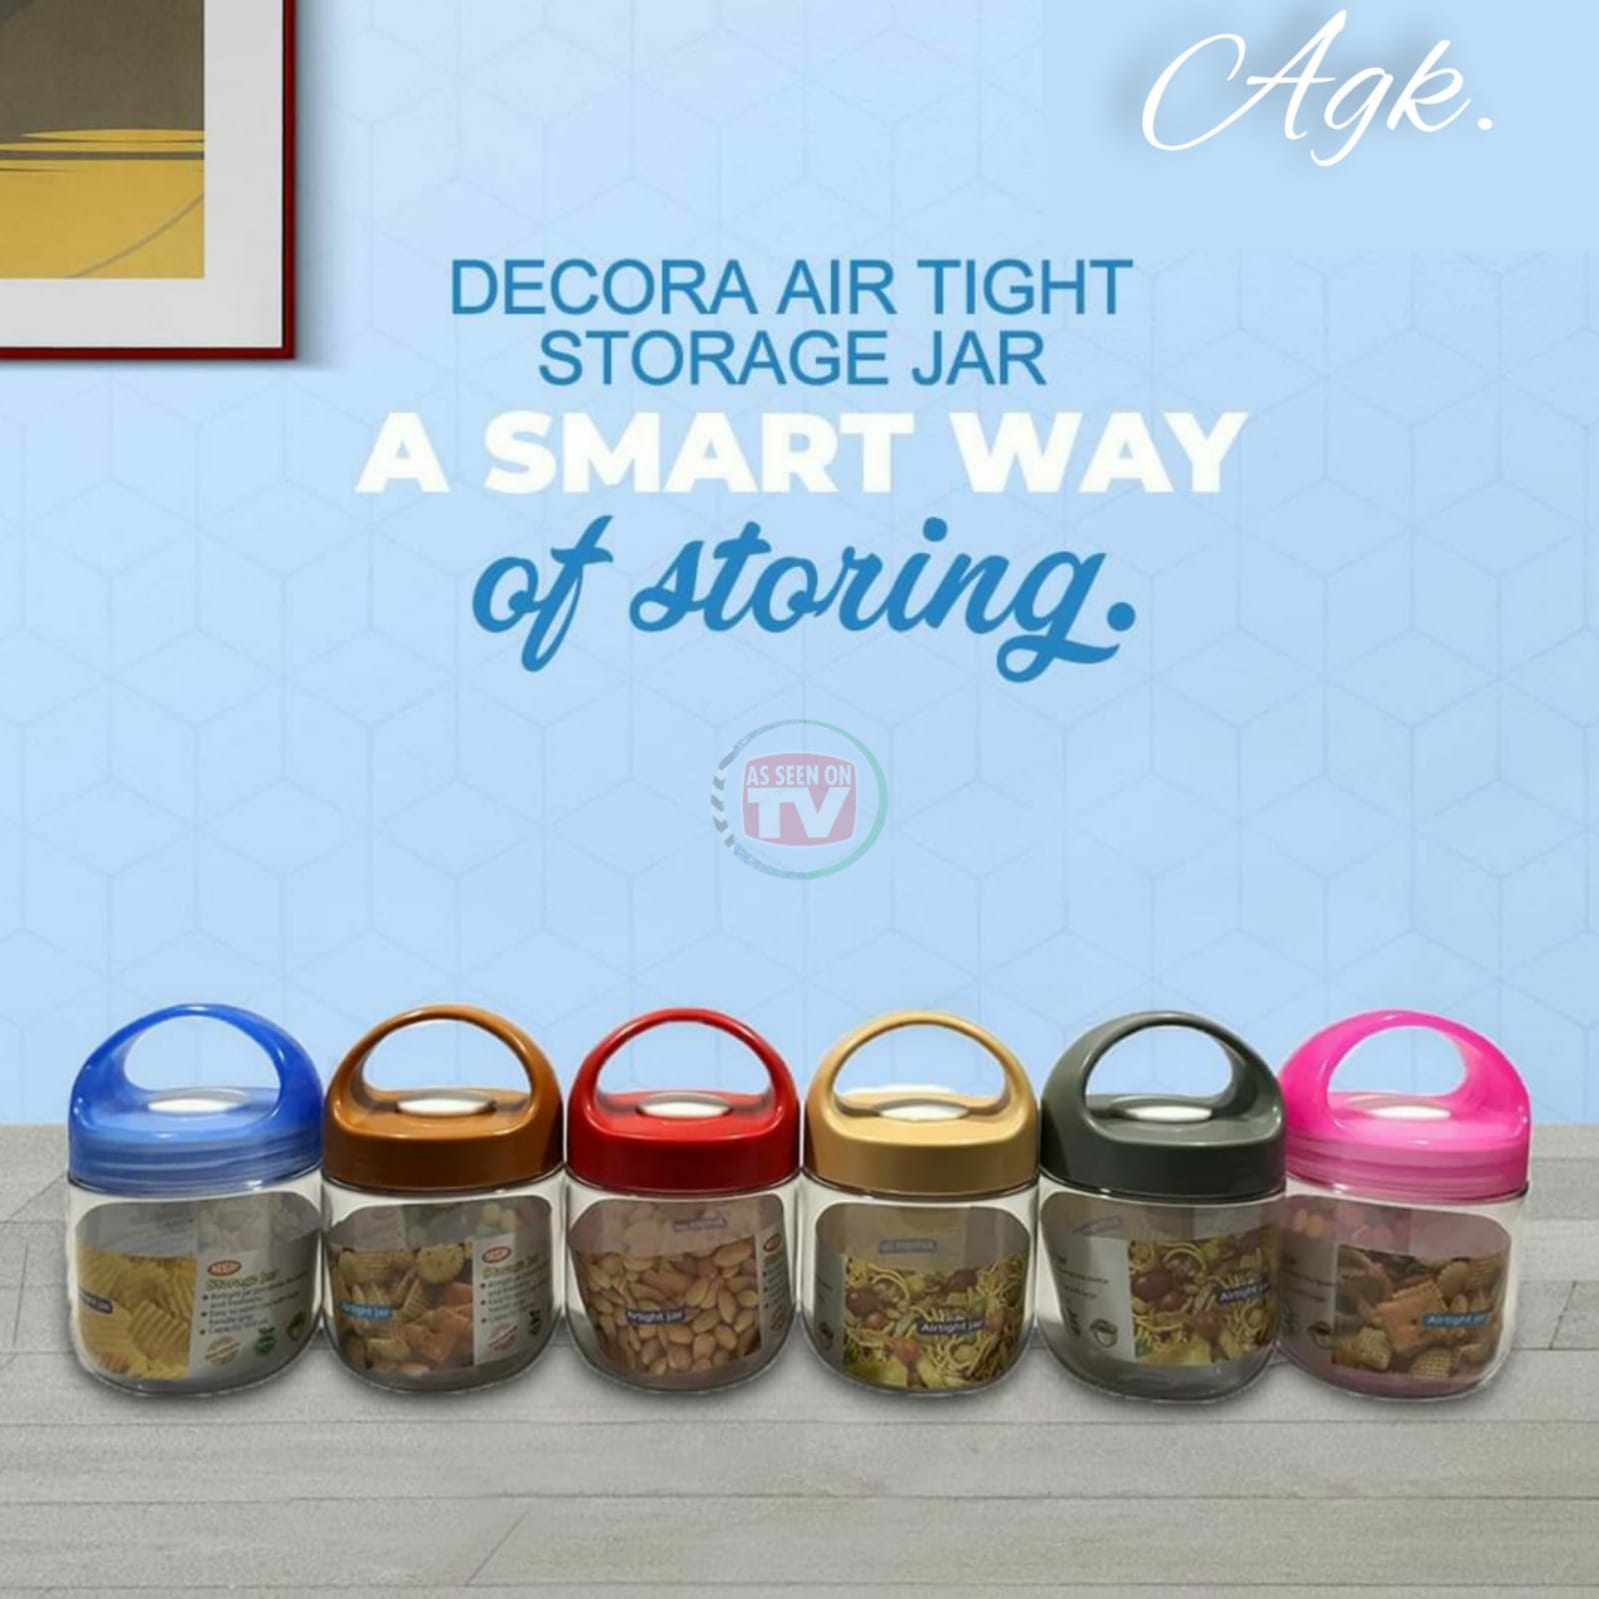 Decora Air Tight Storage Jar